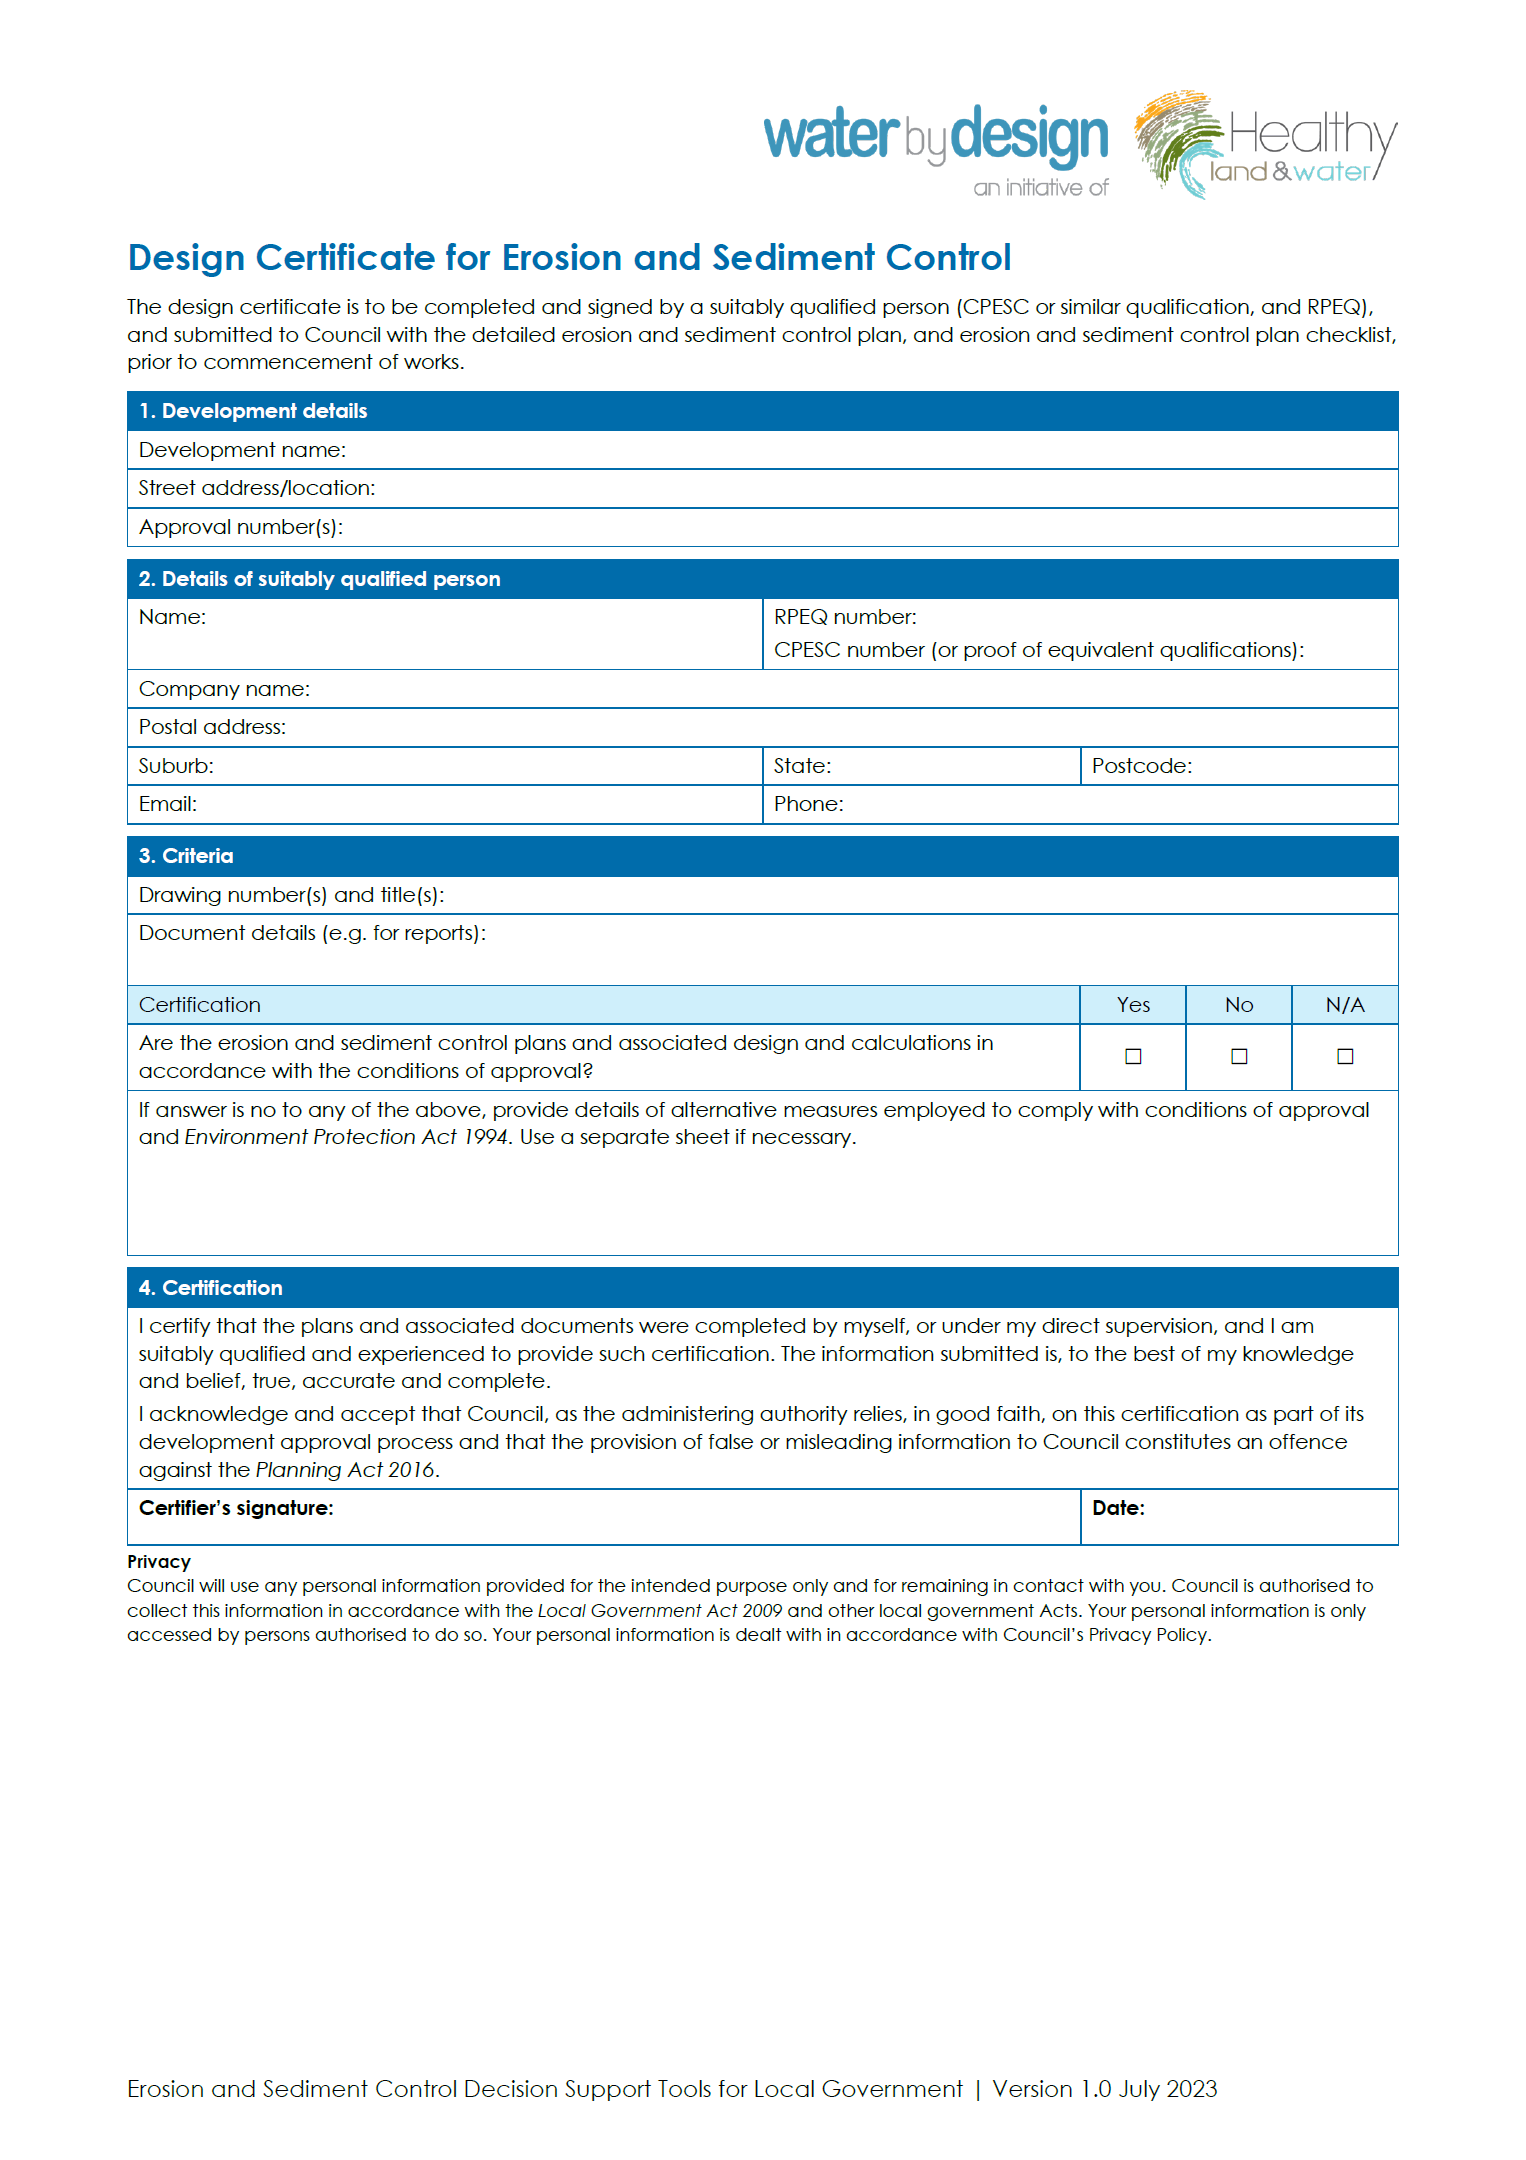 Design Certificate for Erosion and Sediment Control (2023)